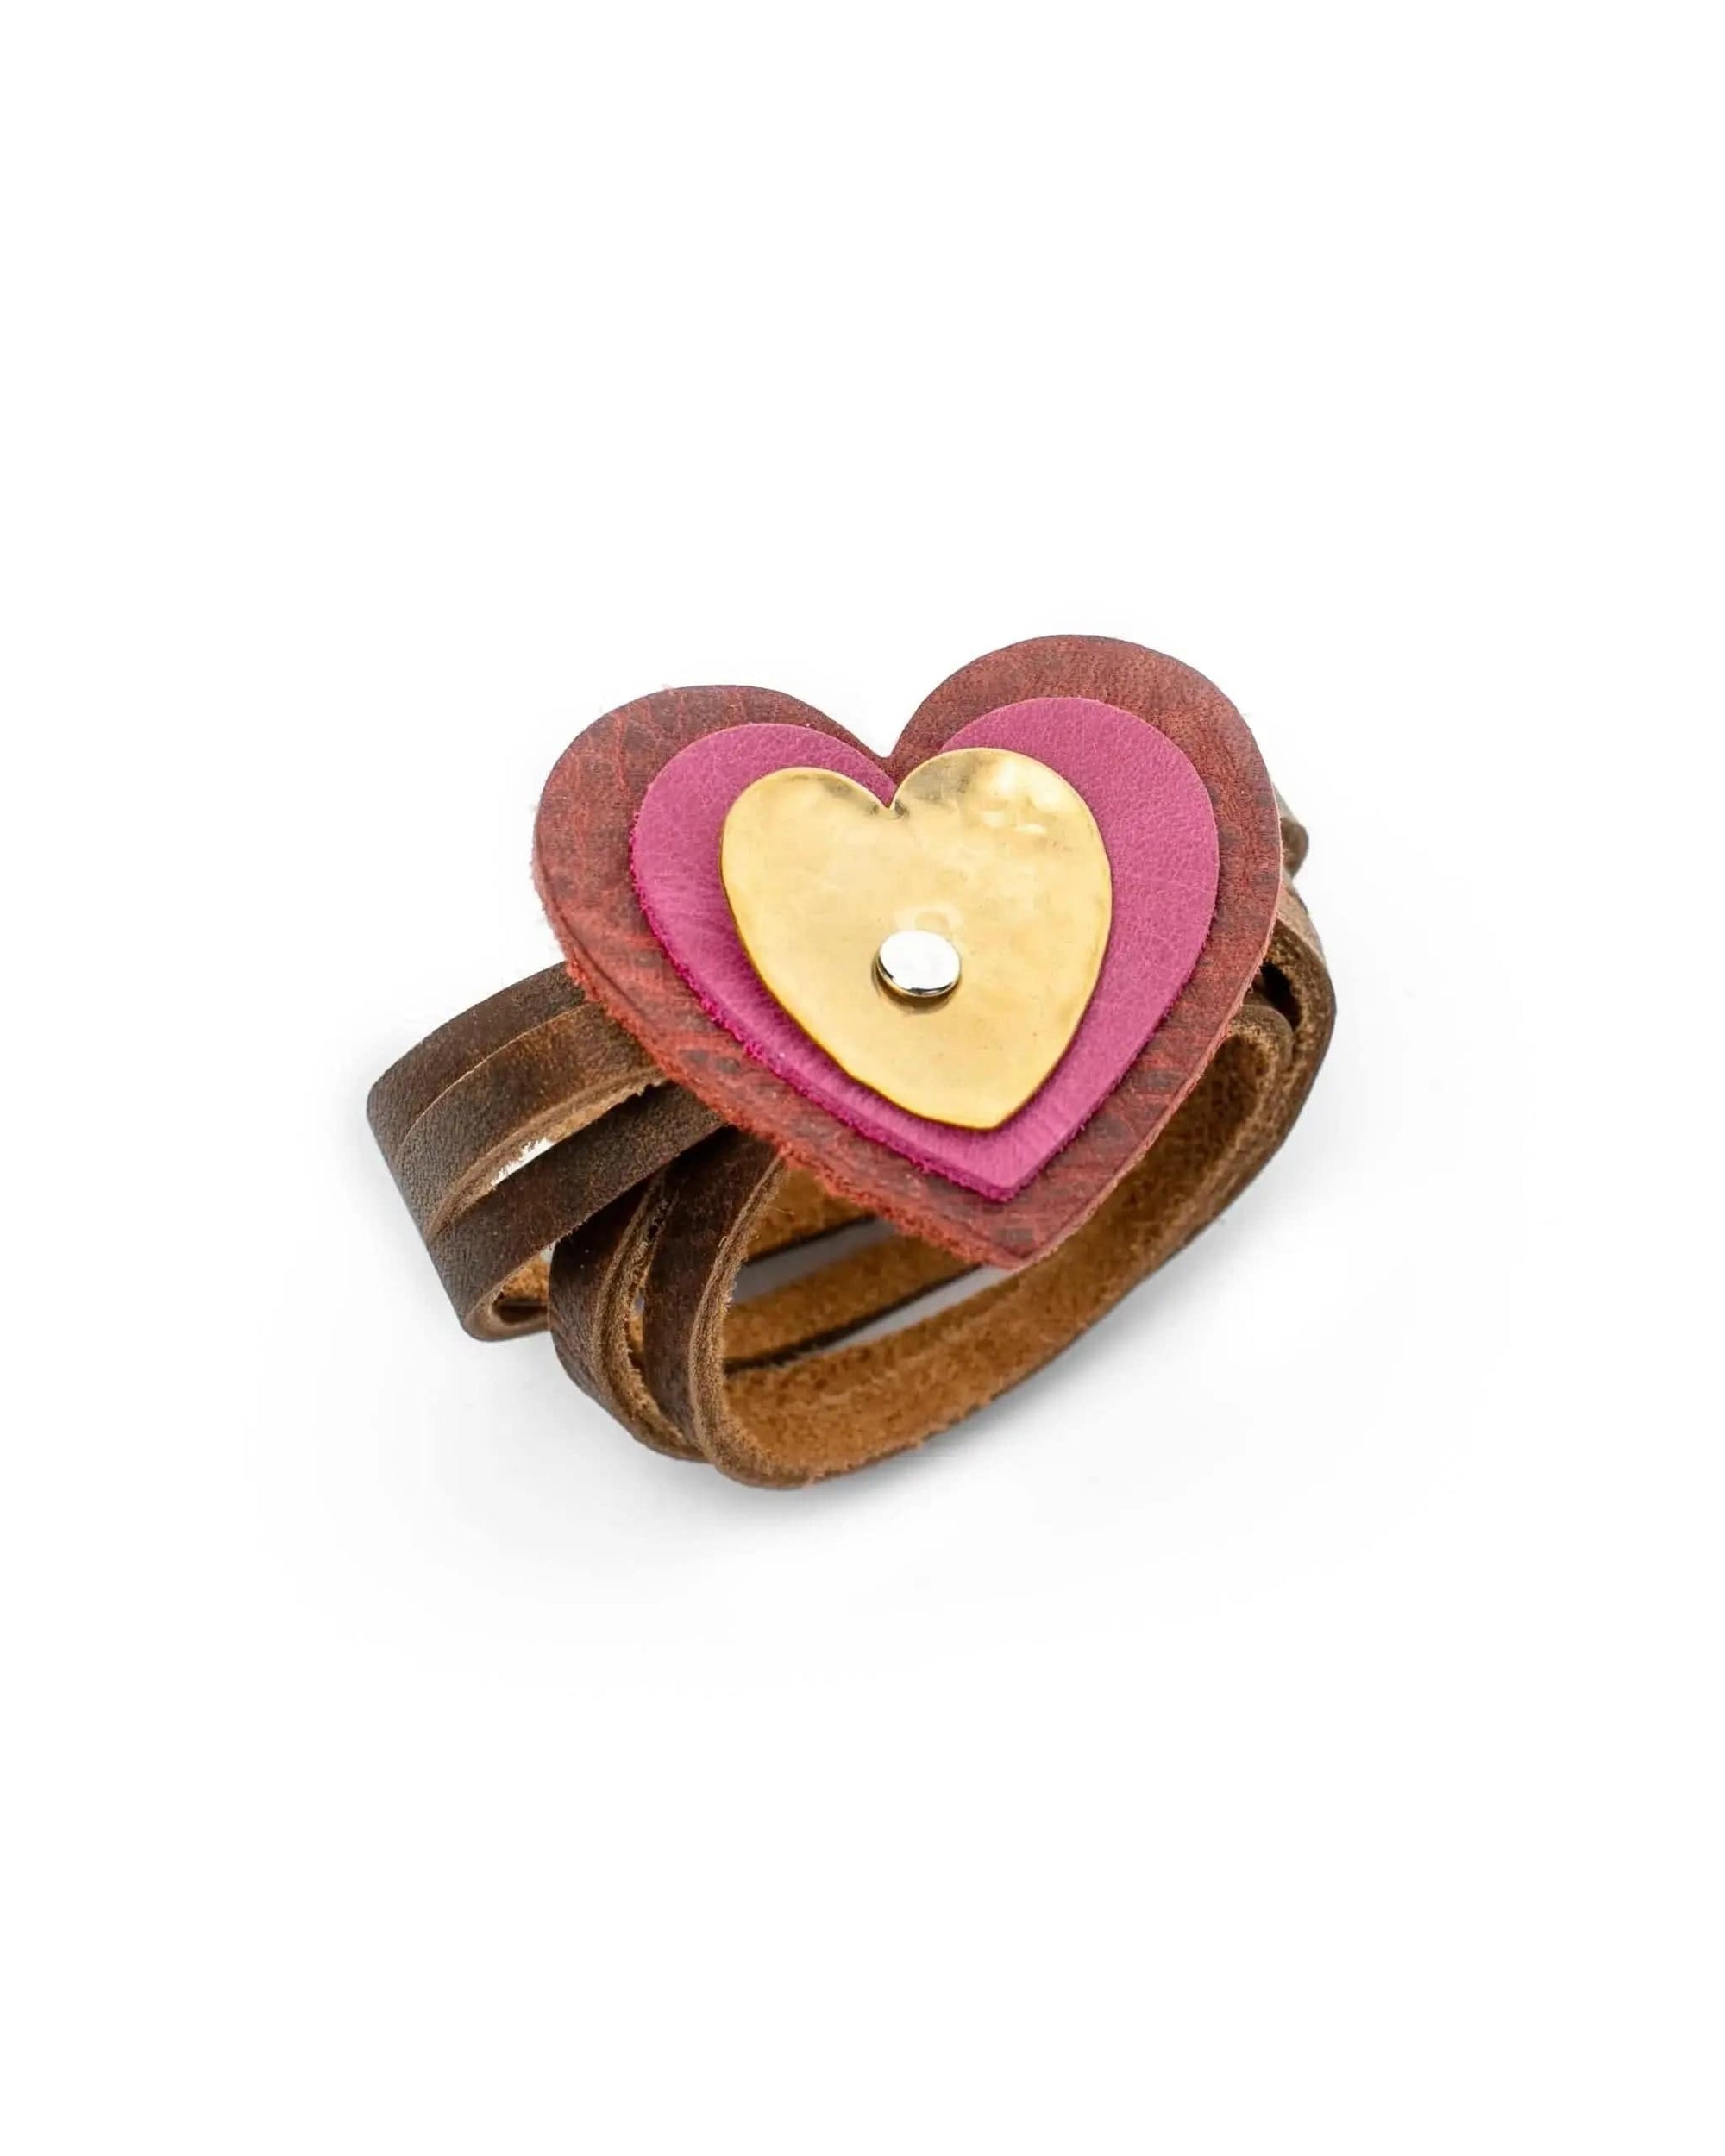 Liv & B Designs Bracelets Heart Double Wrap Leather Heart